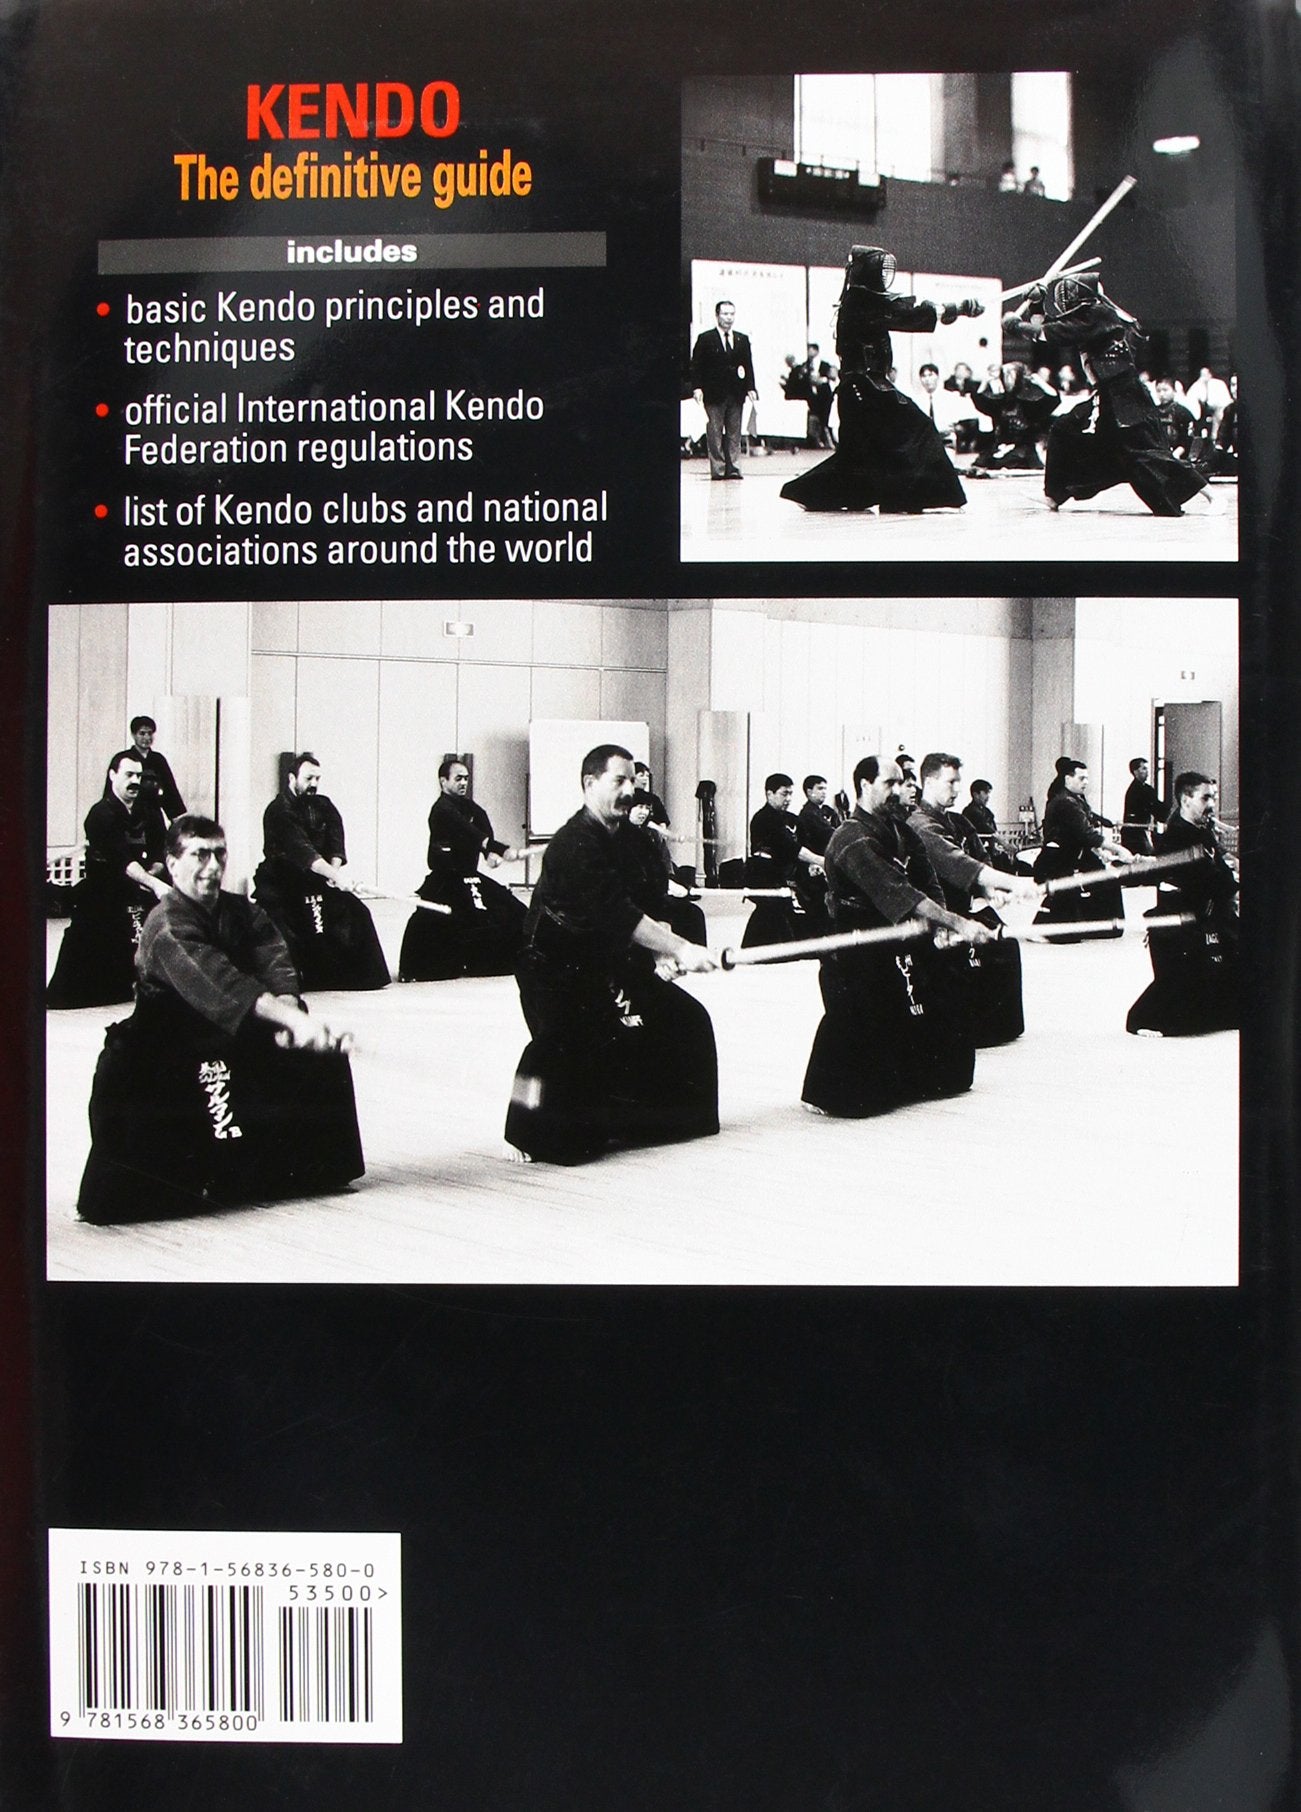 Kendo: The Definitive Guide Book by Hiroshi Ozawa (Hardcover) (Preowned) - Budovideos Inc